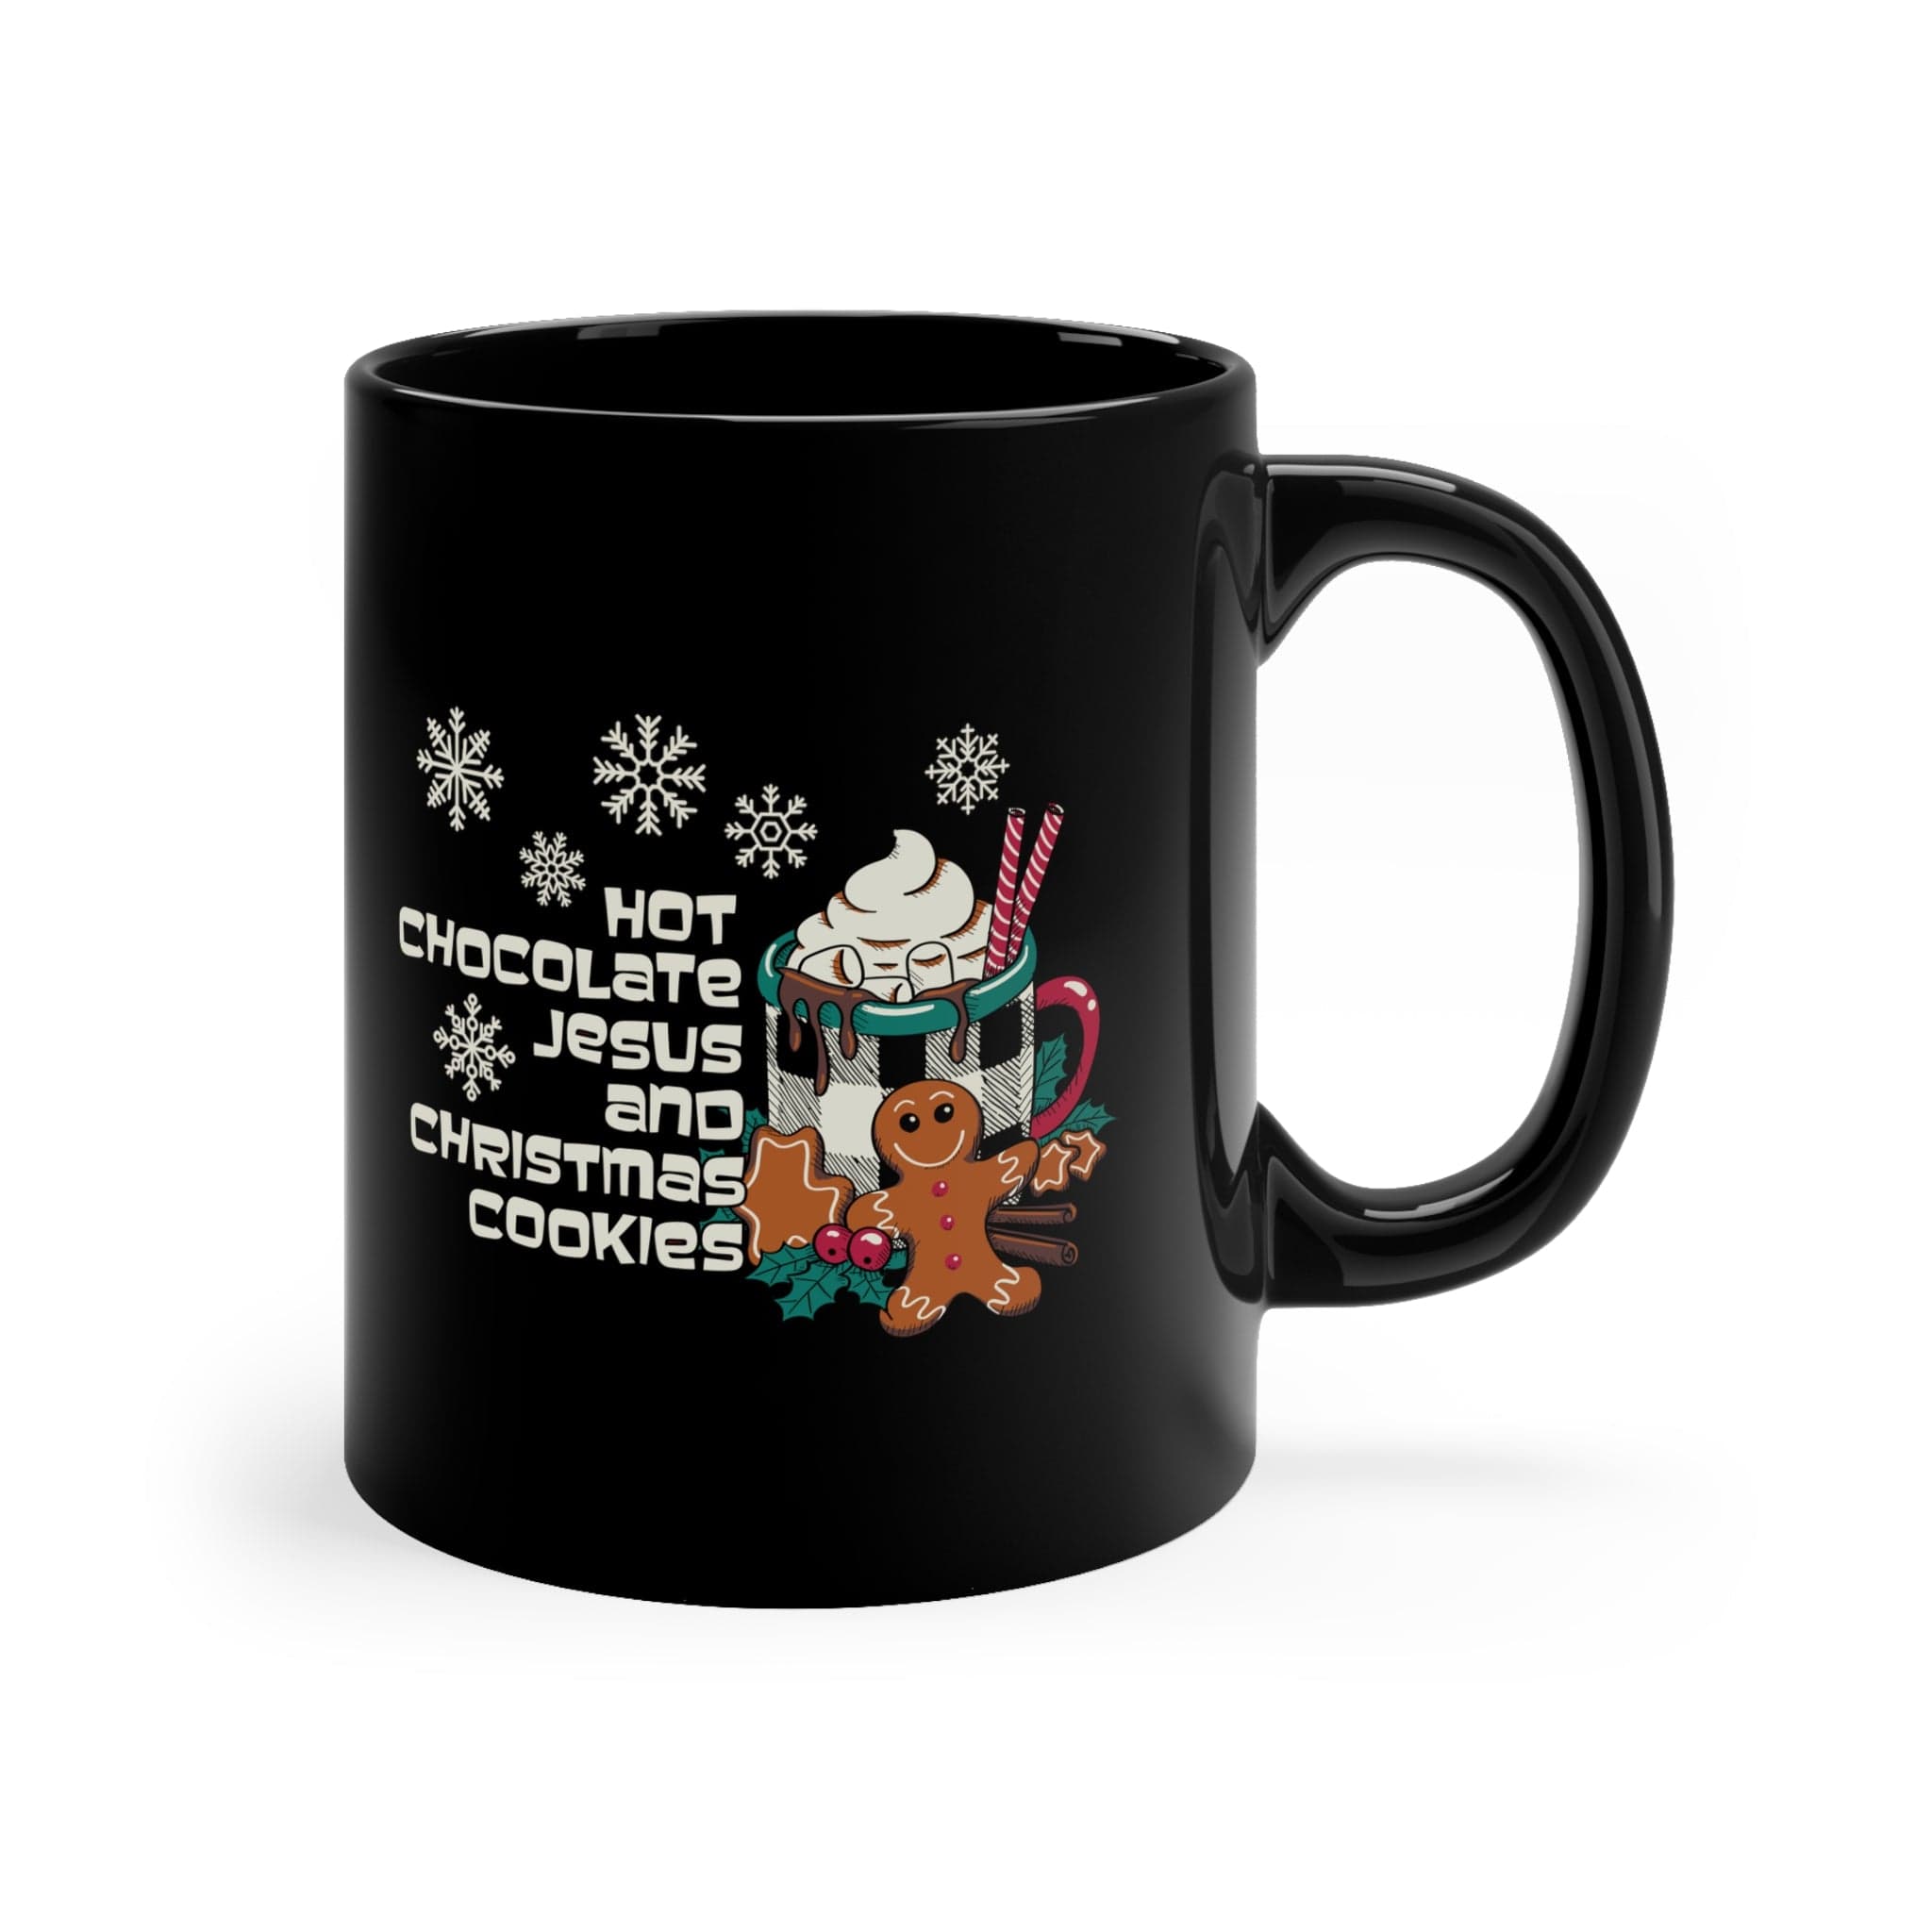 Hot dark chocolate in Christmas mug (ho-ho-ho) 200 Grs - The